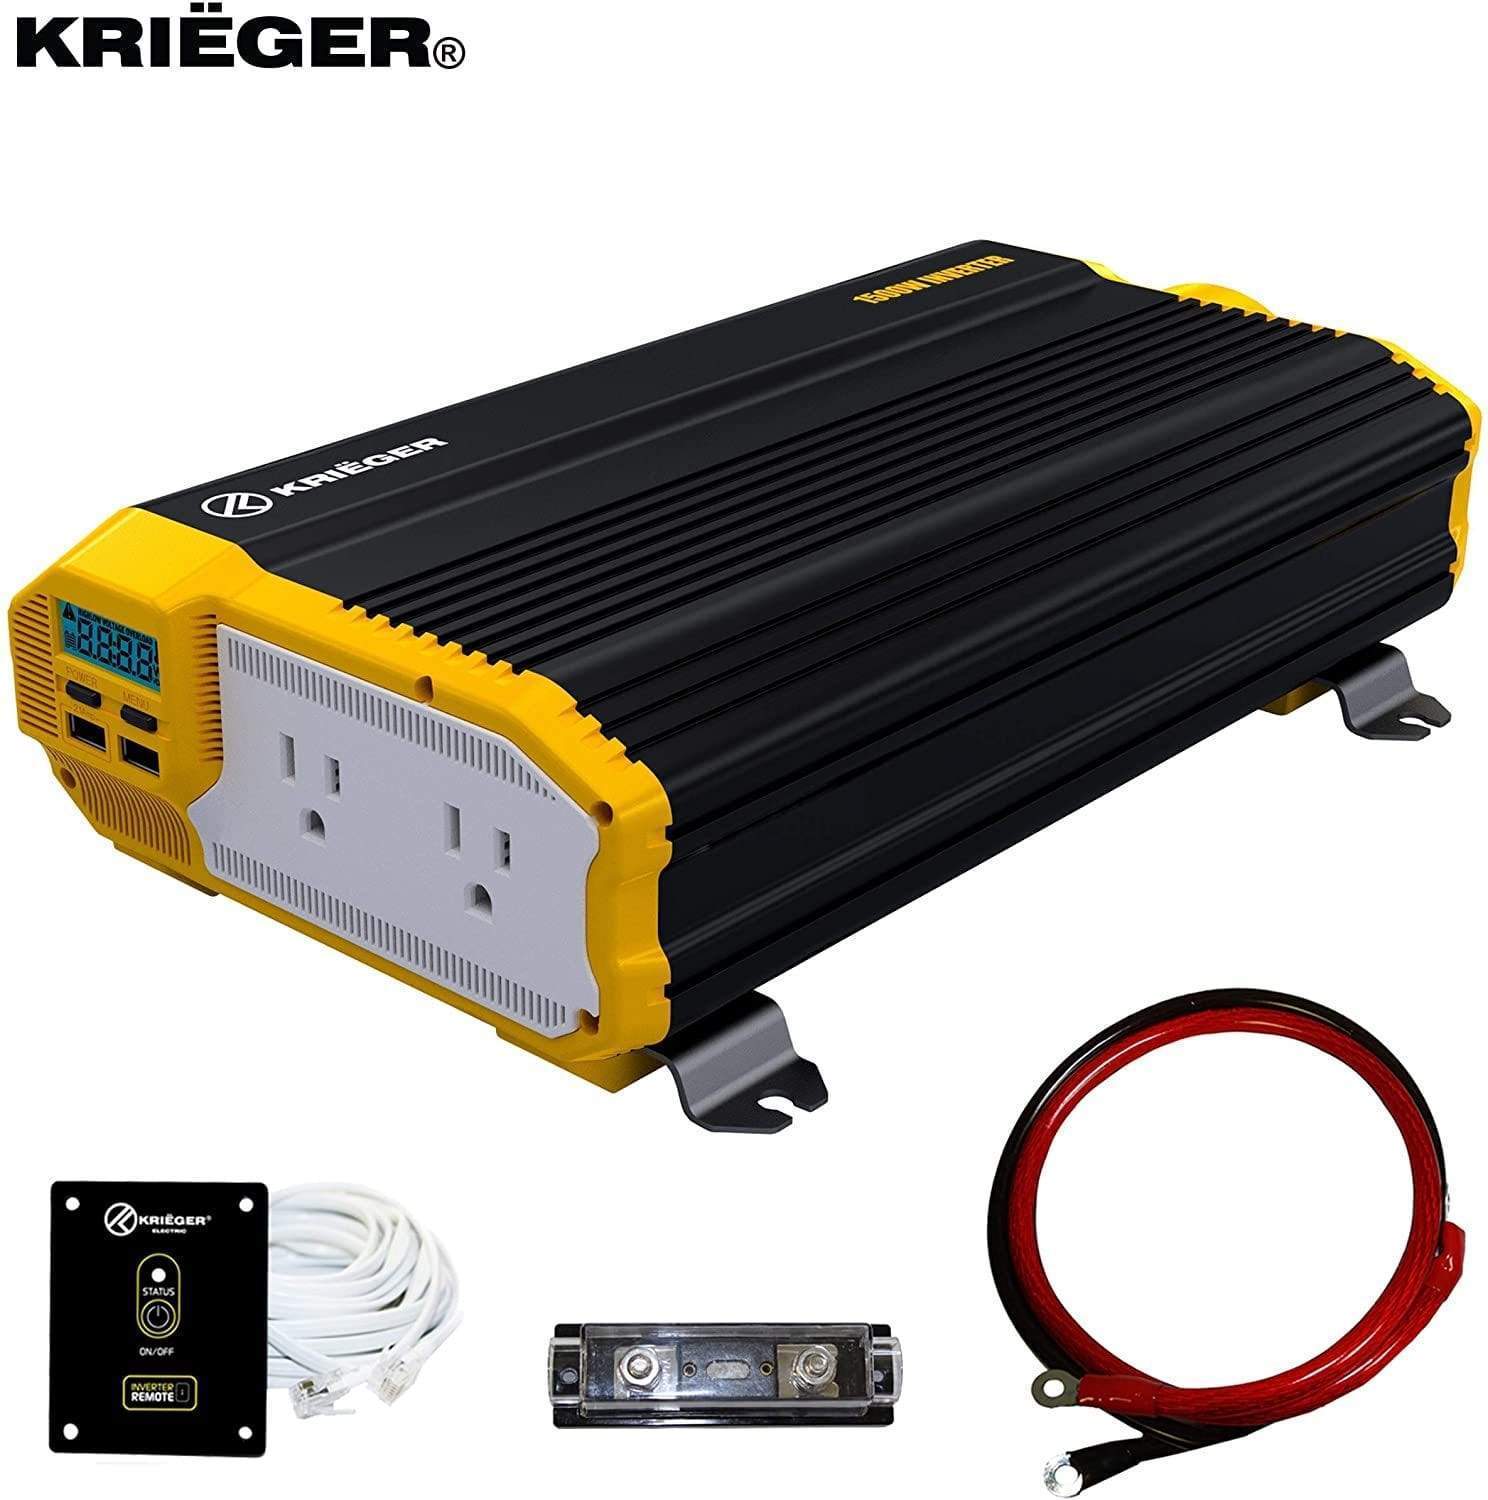 Refurbished KR1500 Krieger 1500 Watt 12V DC to 110V AC Power Inverter – 